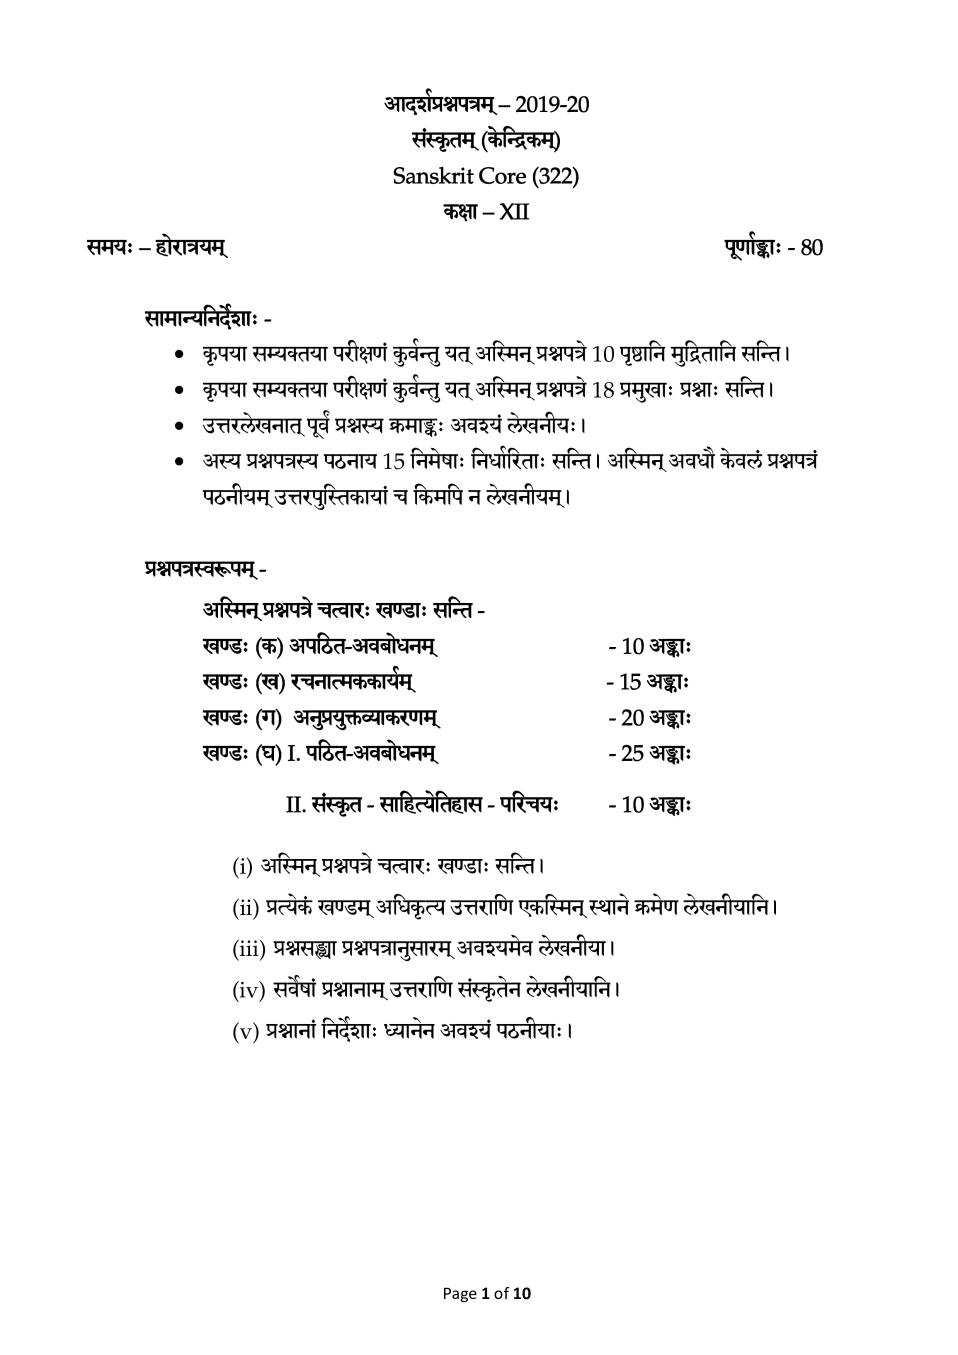 CBSE Class 12 Sample Paper 2020 for Sanskrit Core - Page 1